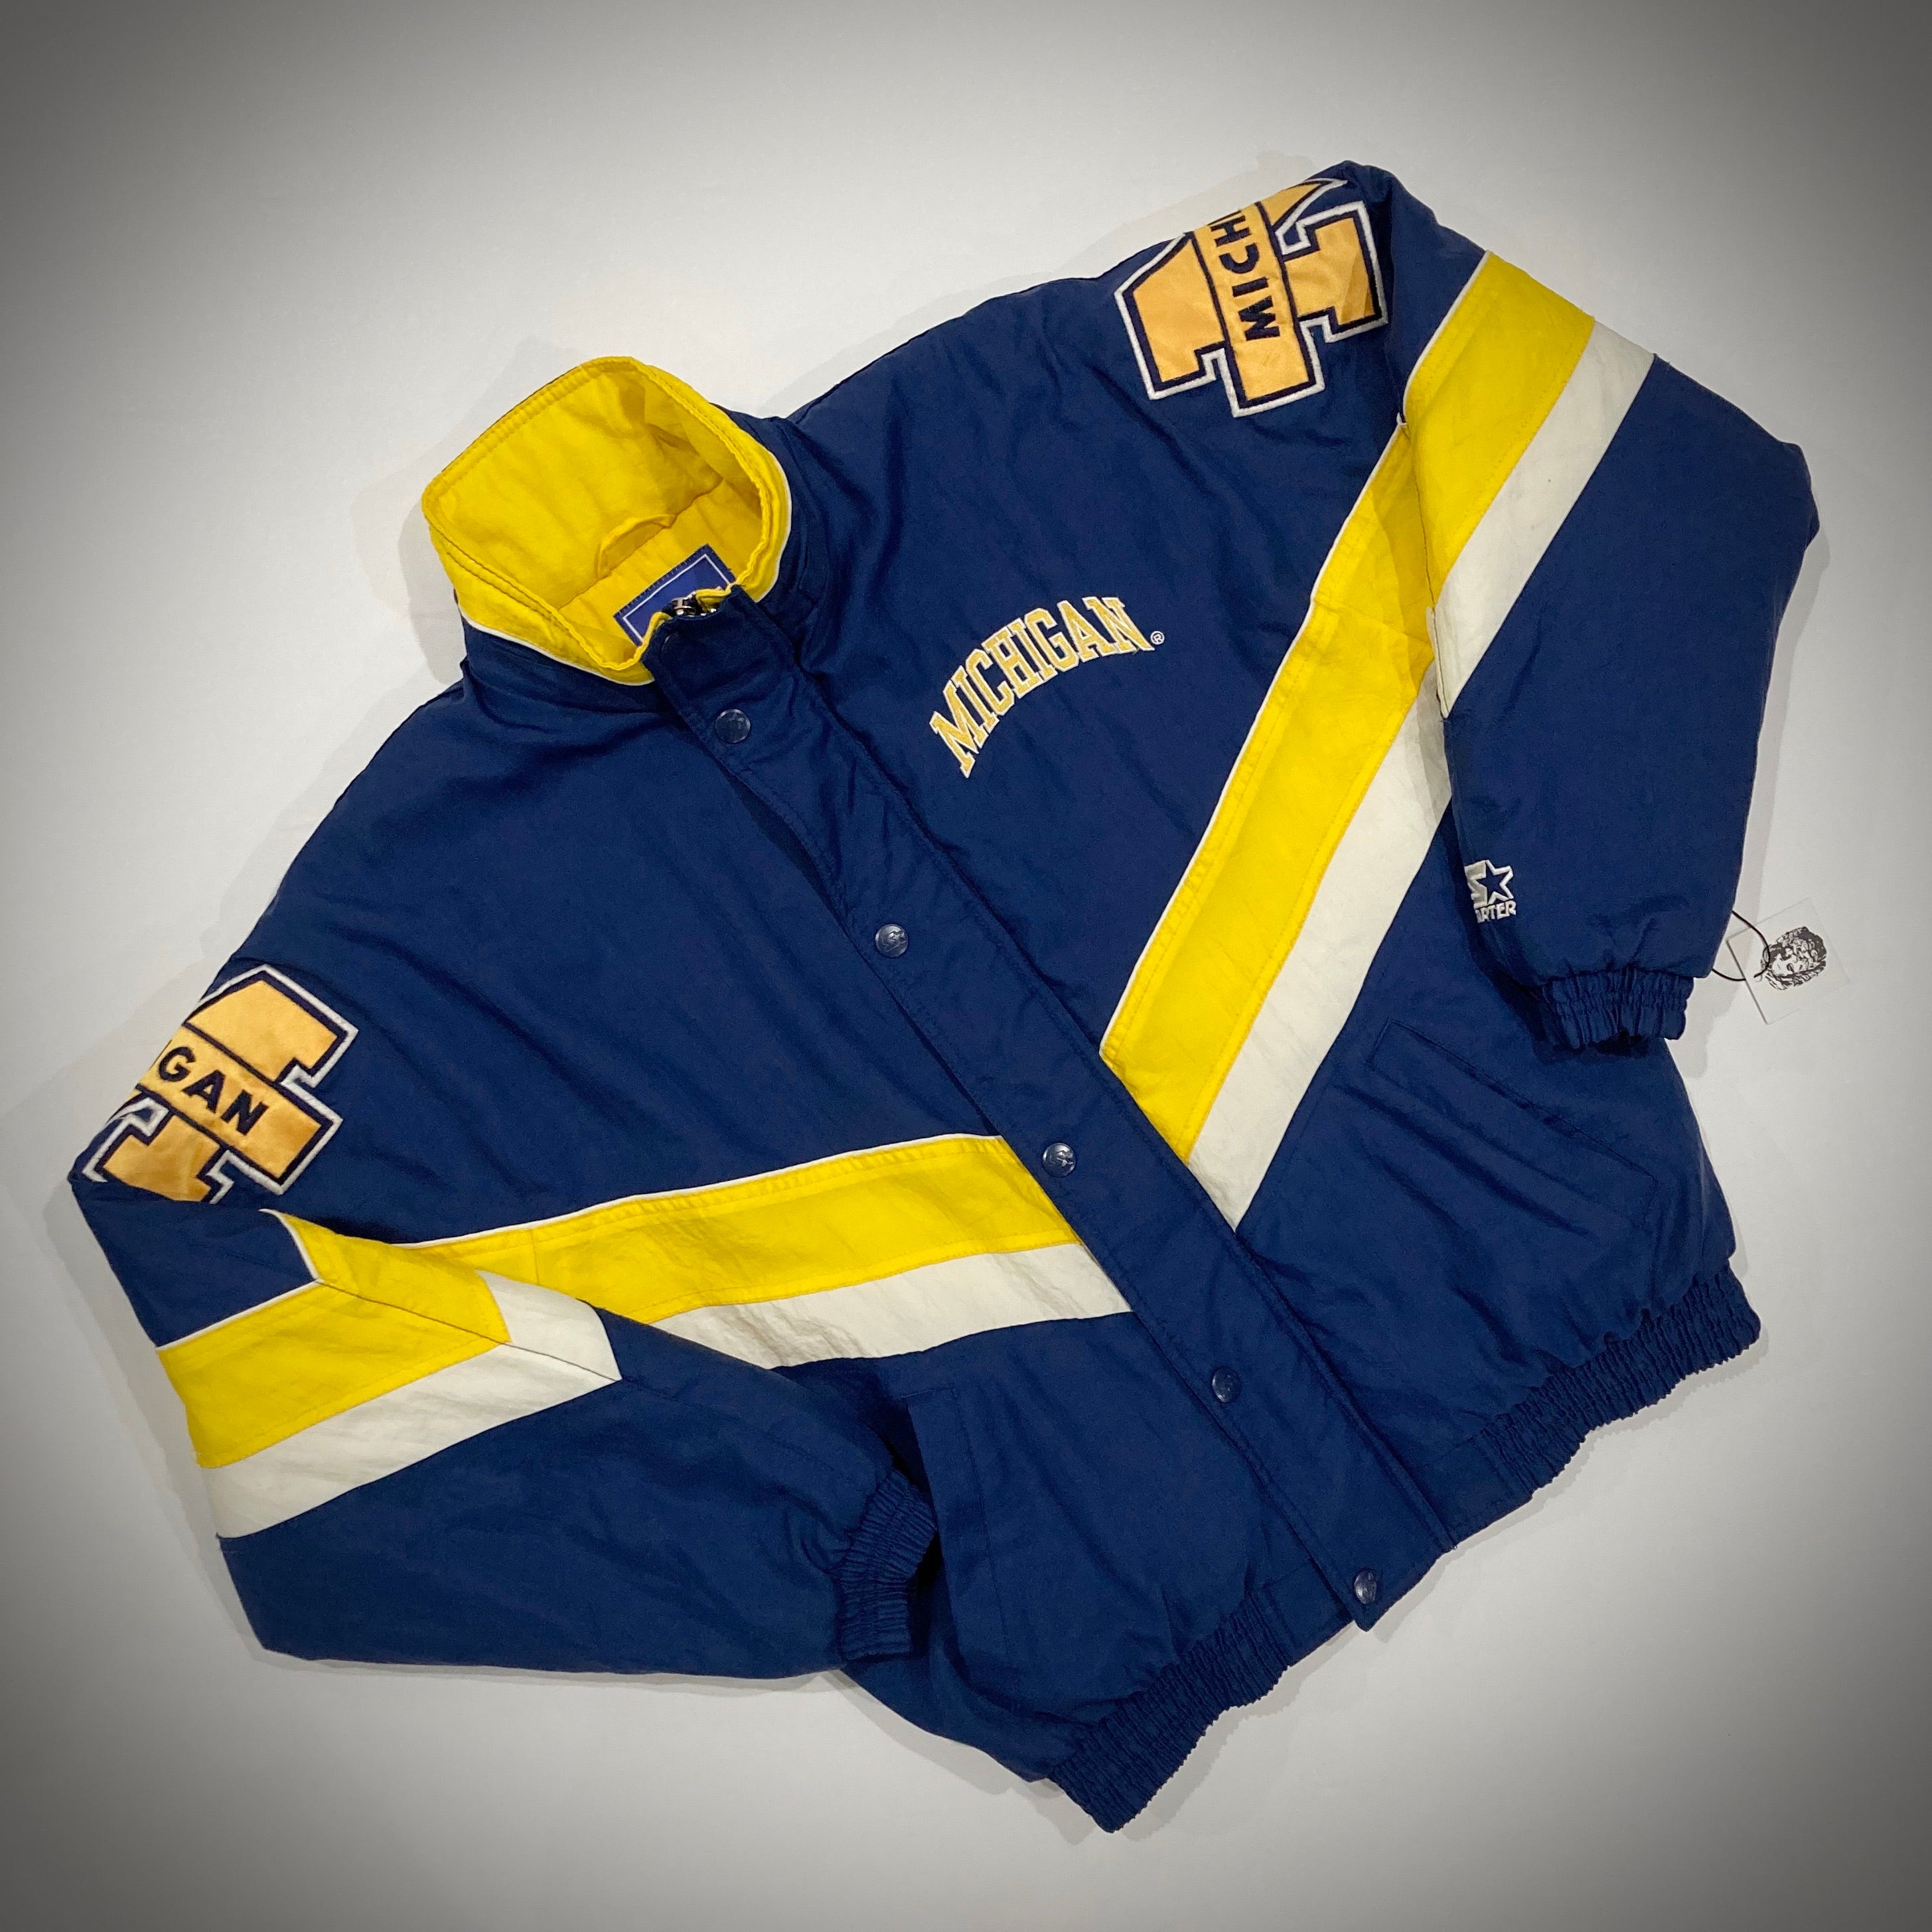 Vintage University of Michigan Starter Jacket